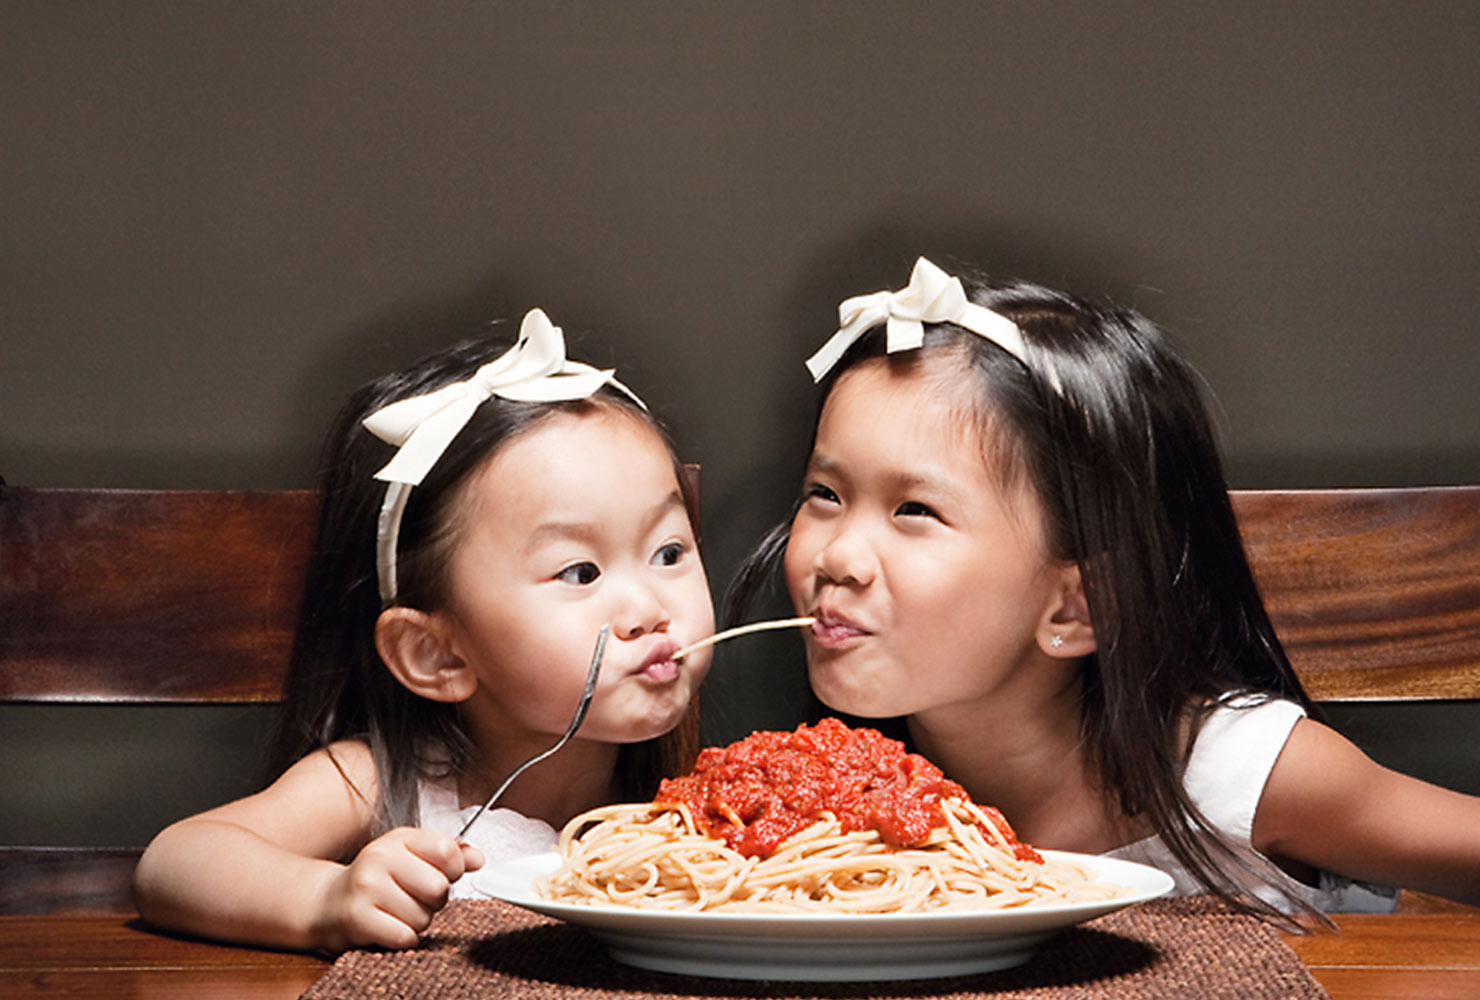 sibling photo ideas spaghetti girls